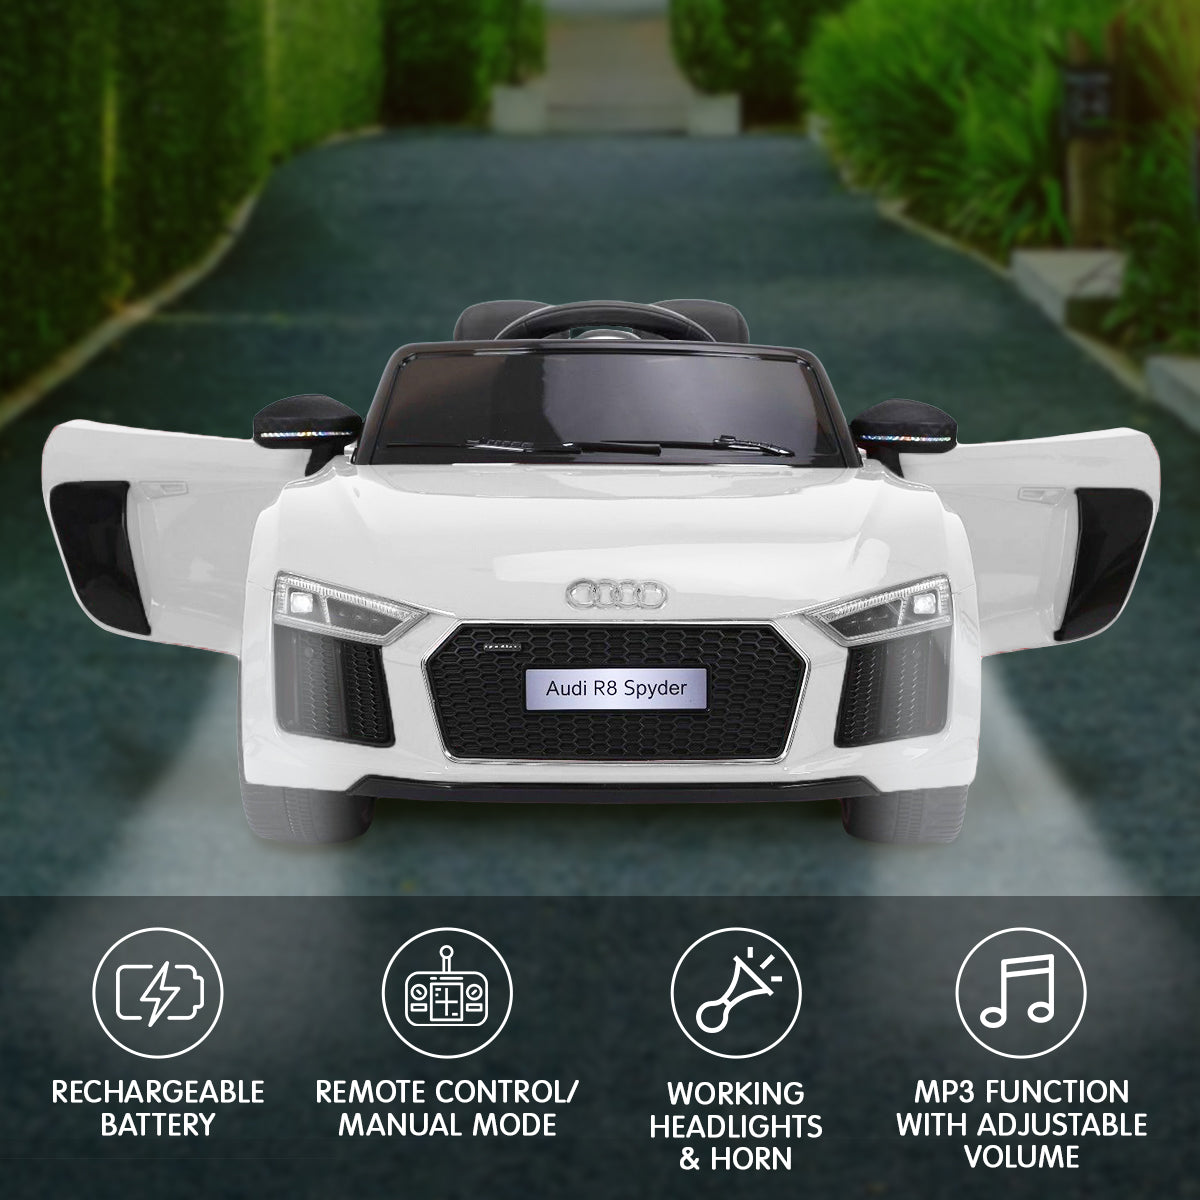 R8 Spyder Audi Licensed Kids Electric Ride On Car Remote Control - White